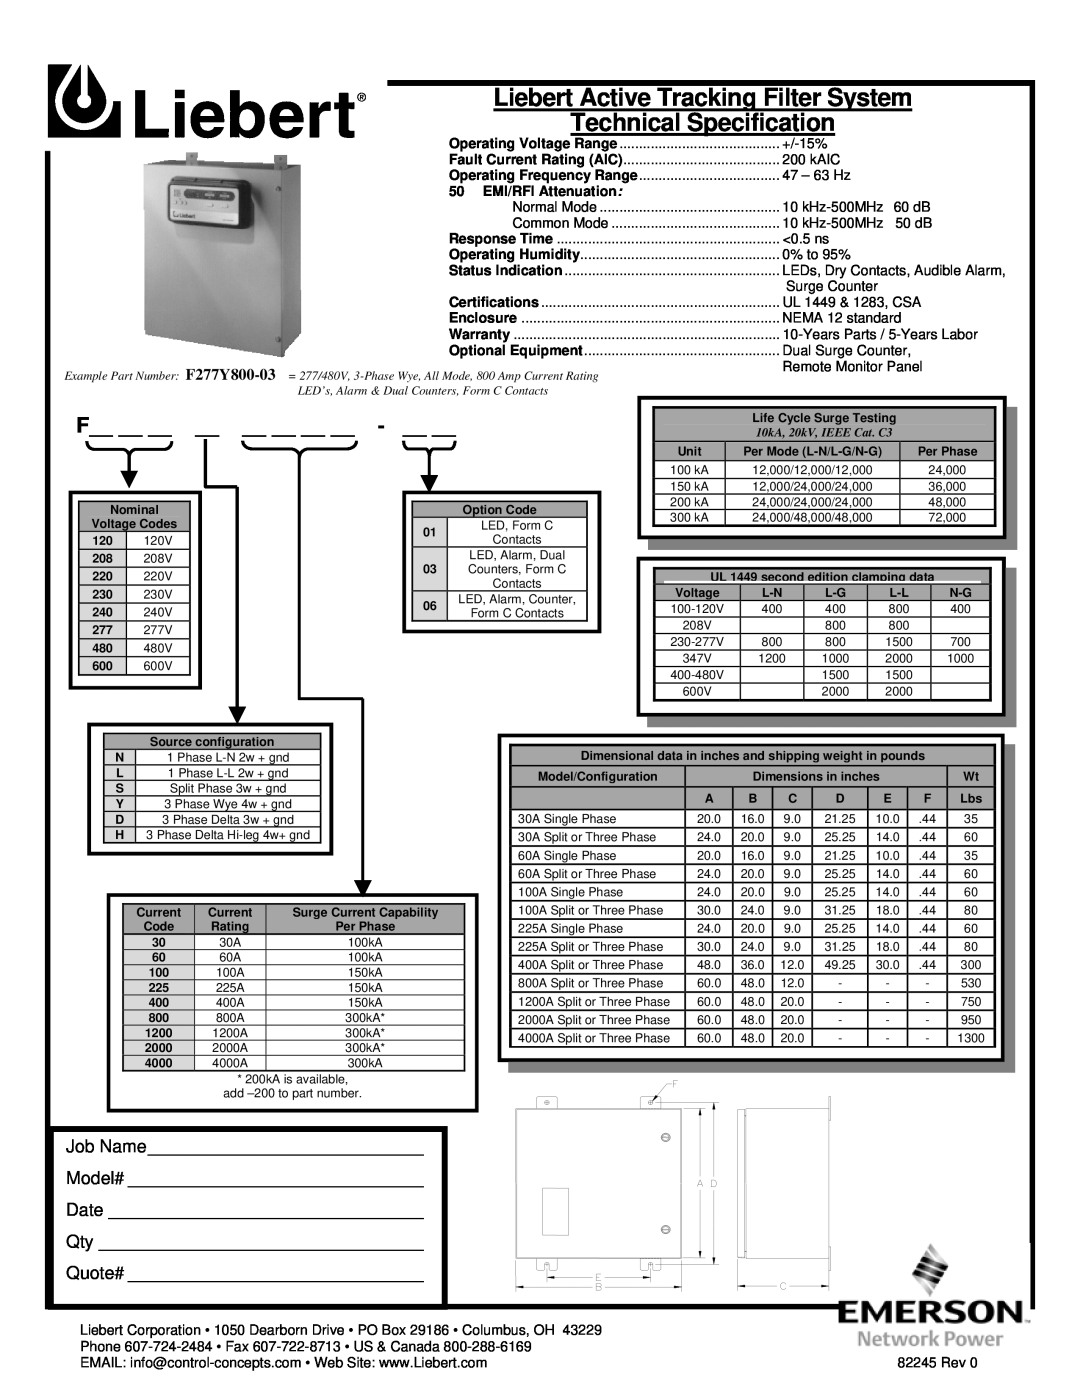 Liebert F277Y800-03 warranty Liebert Active Tracking Filter System, Technical Specification, EMI/RFI Attenuation 